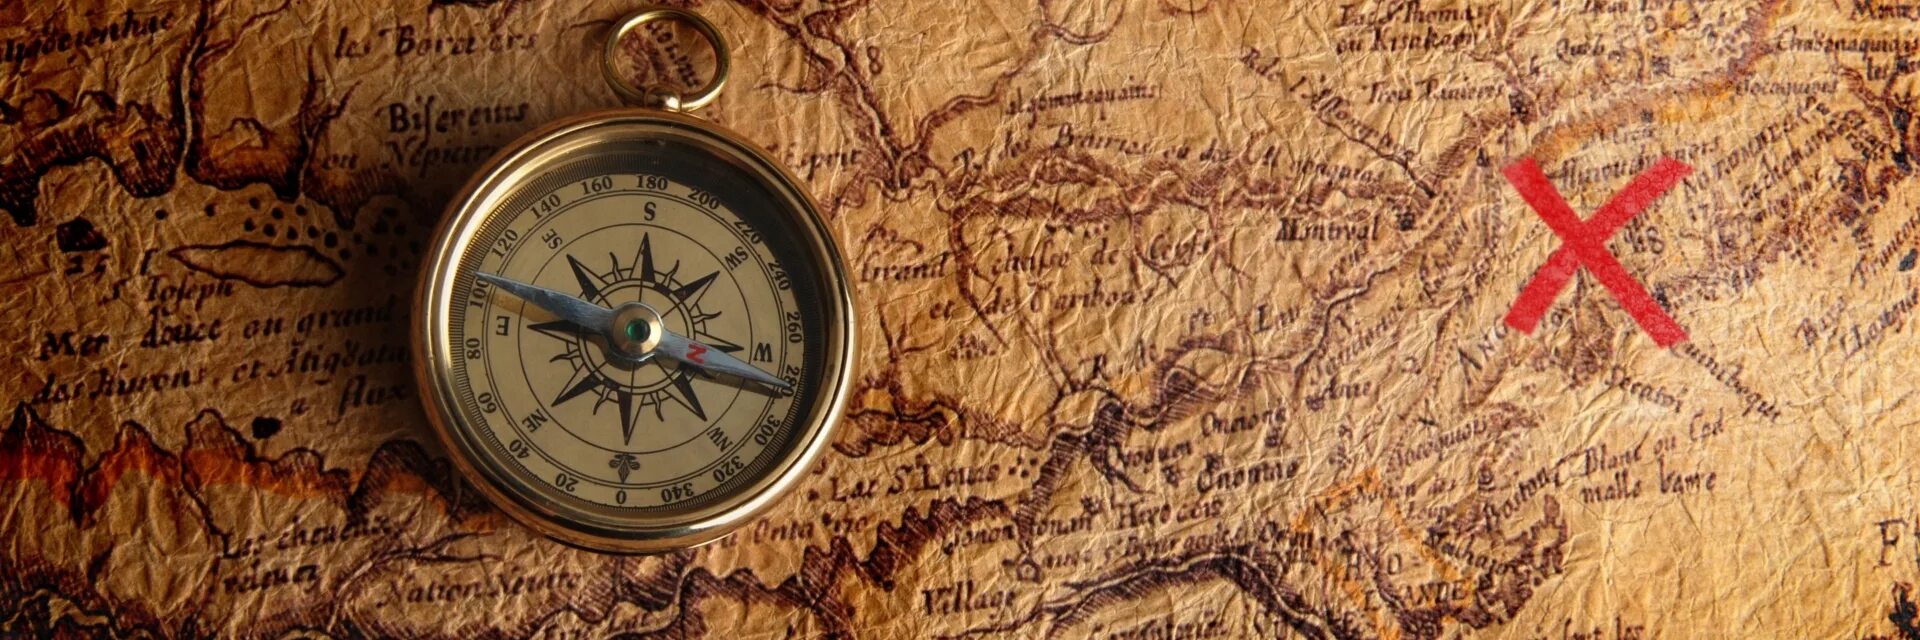 Старинный компас. Компас на карте. Древний компас. Старинная карта с компасом.